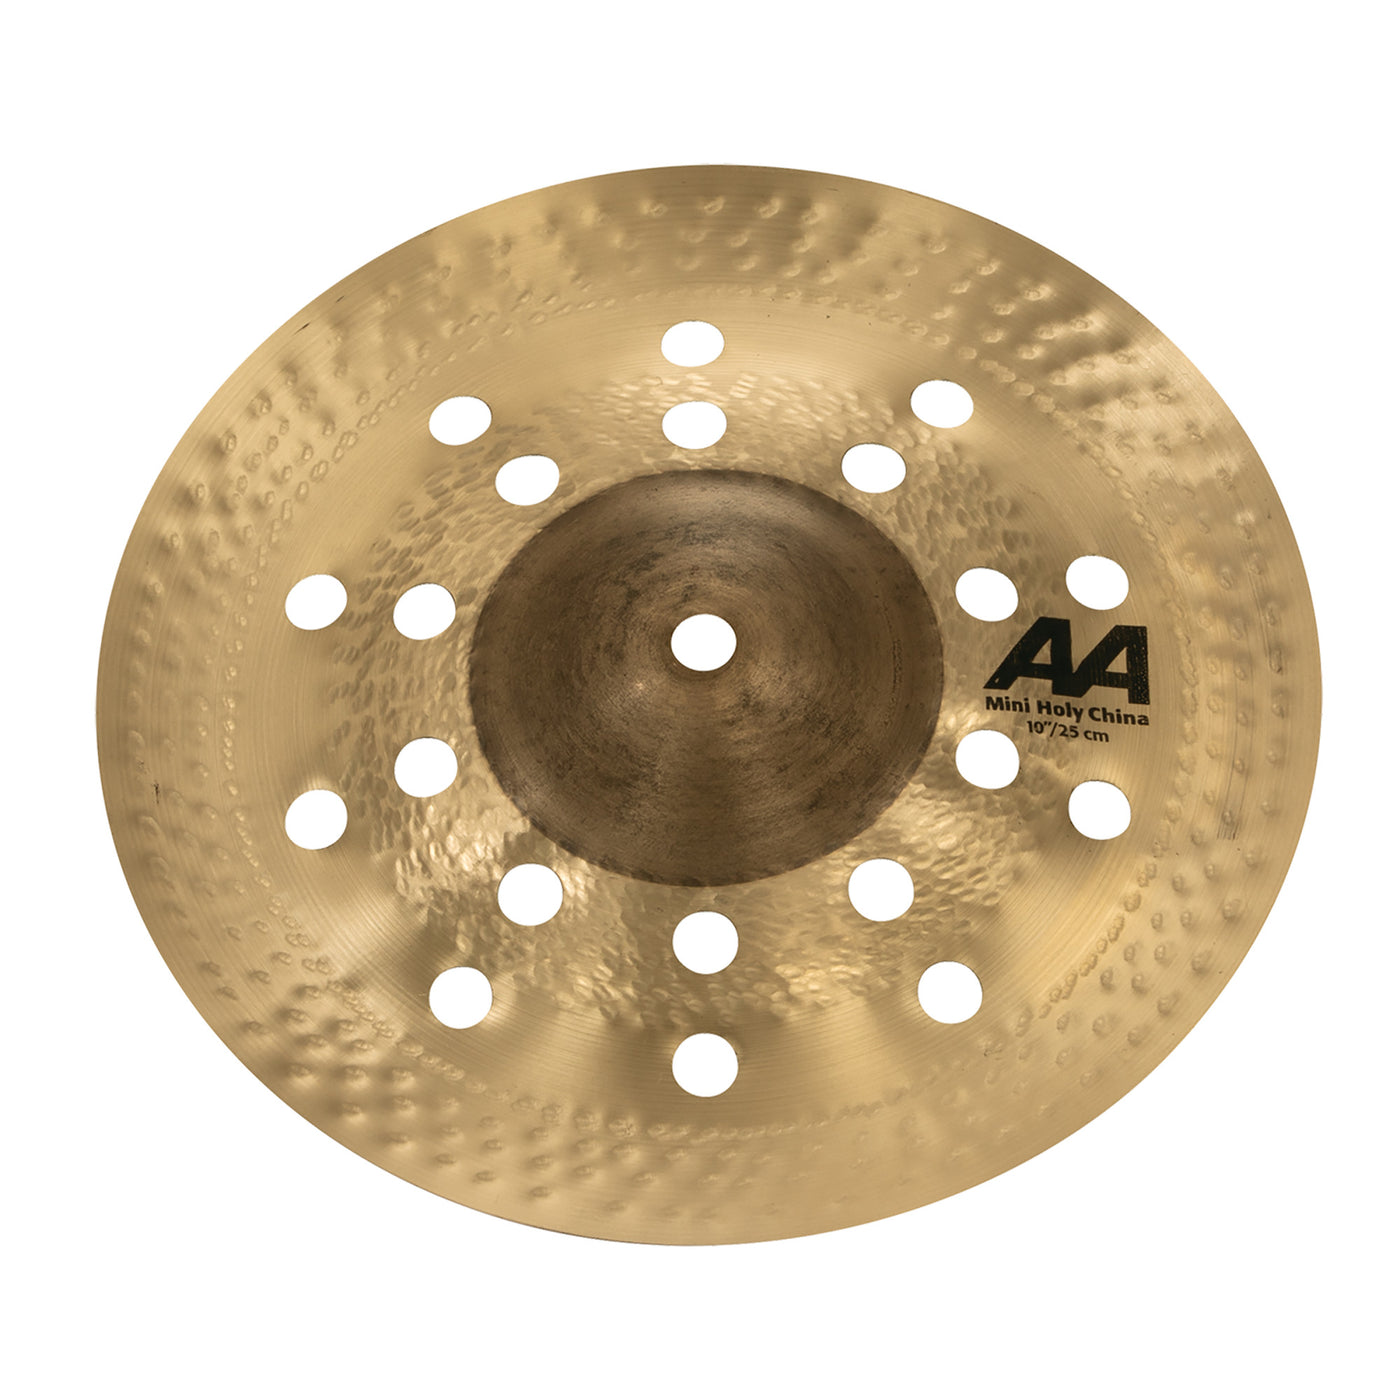 Sabian 10” AA Mini Holy China Cymbal